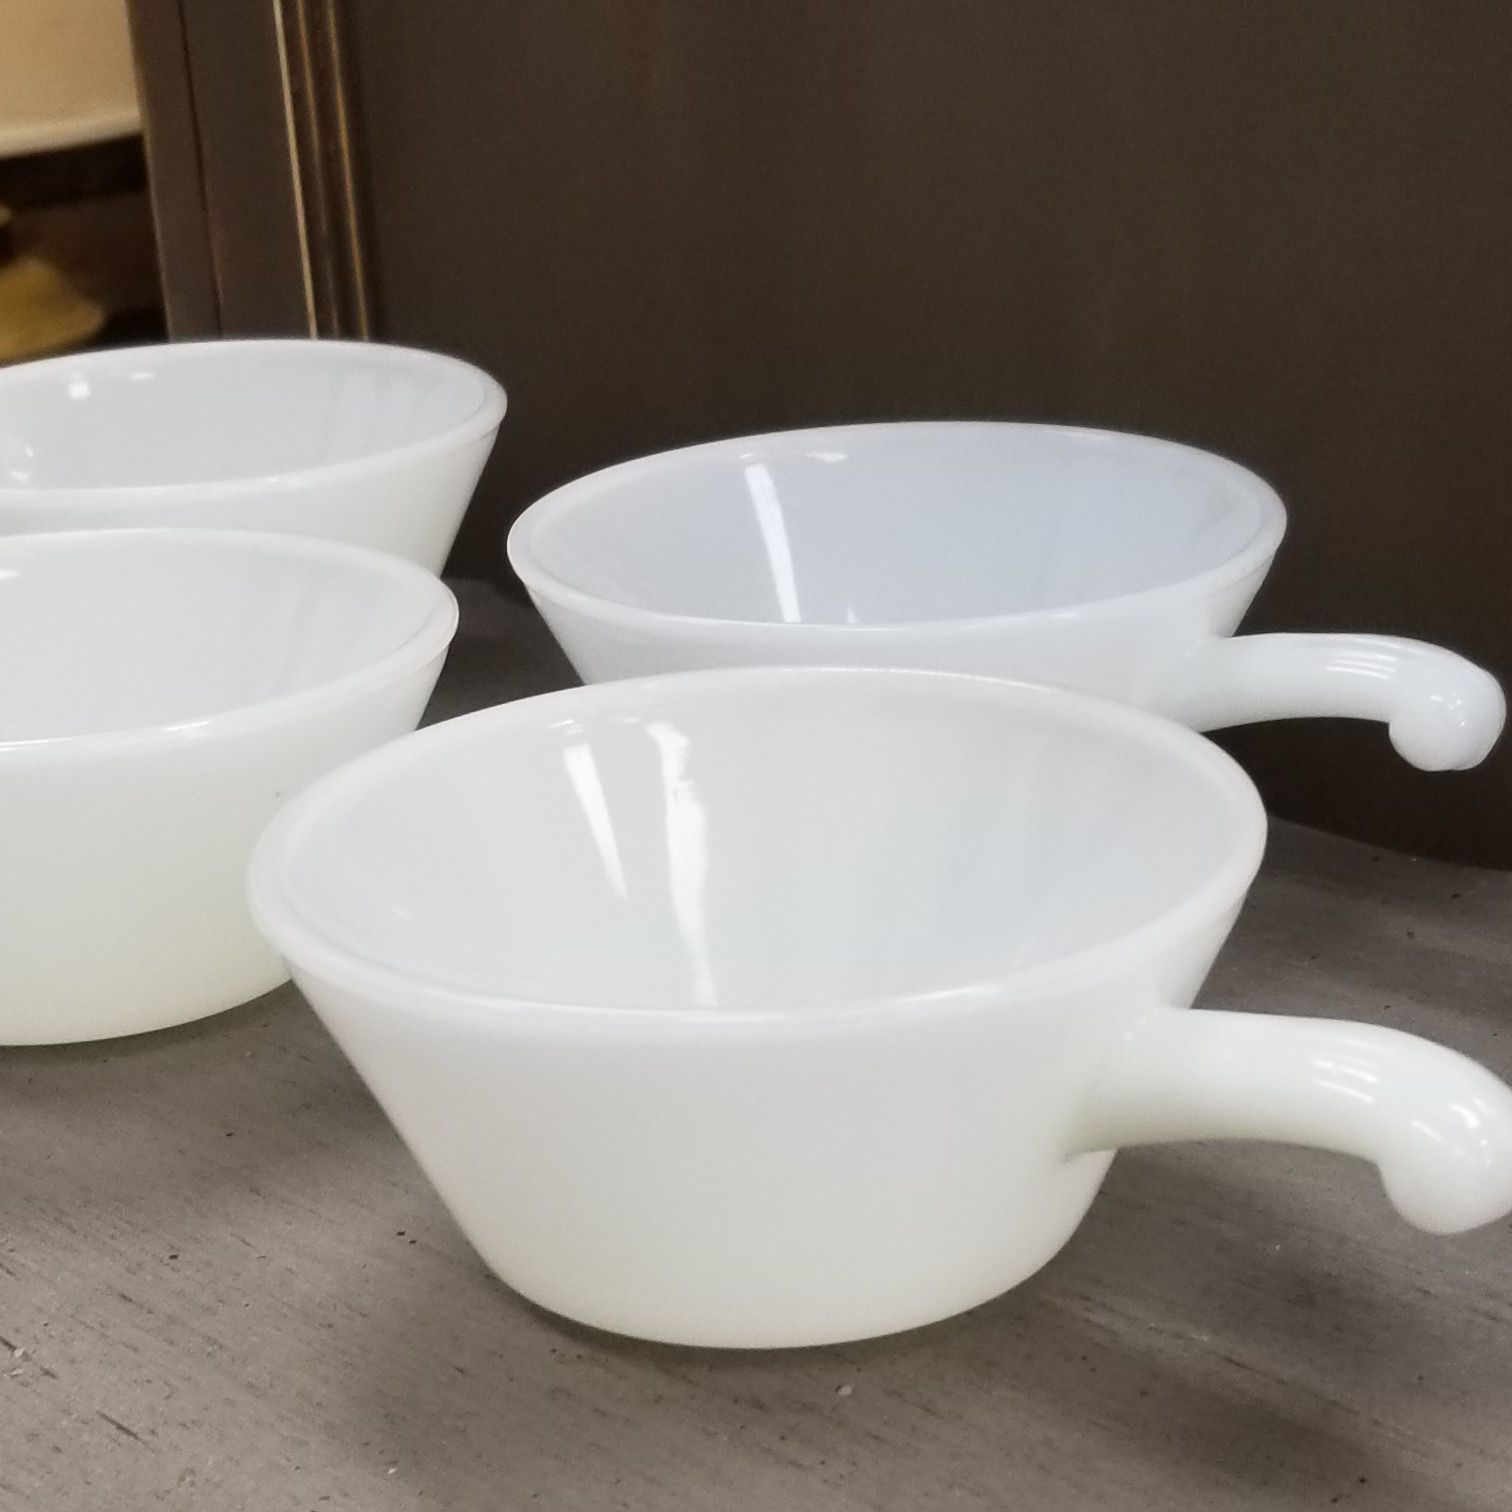 Fire King Milk Glass Bowls, set of 4